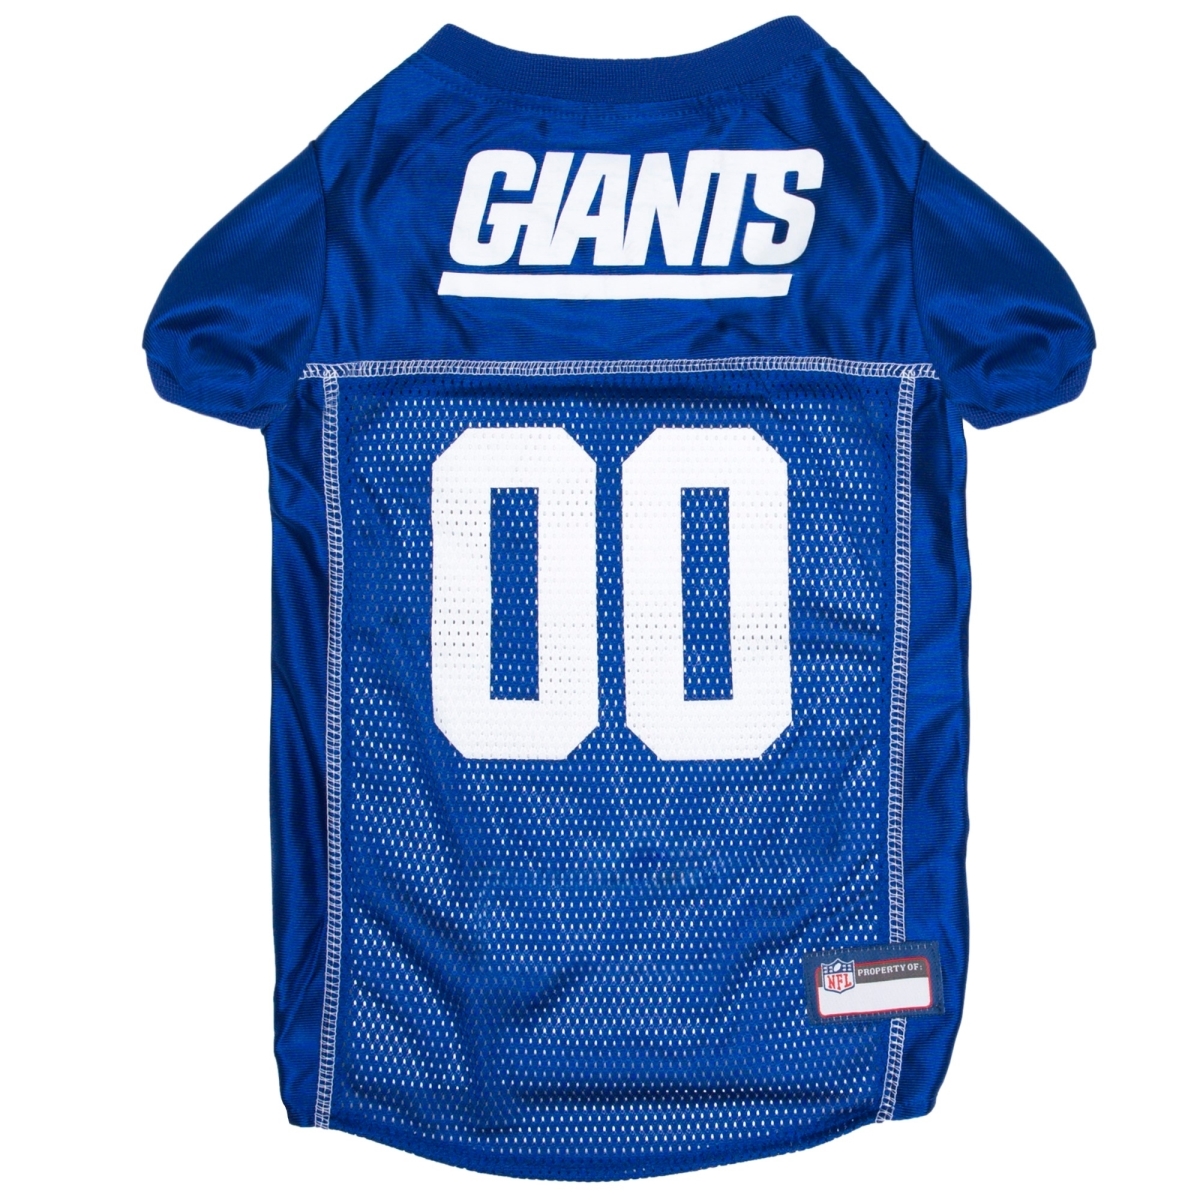 Dgnyg-4006-l New York Giants Dog Jersey, Blue - Large